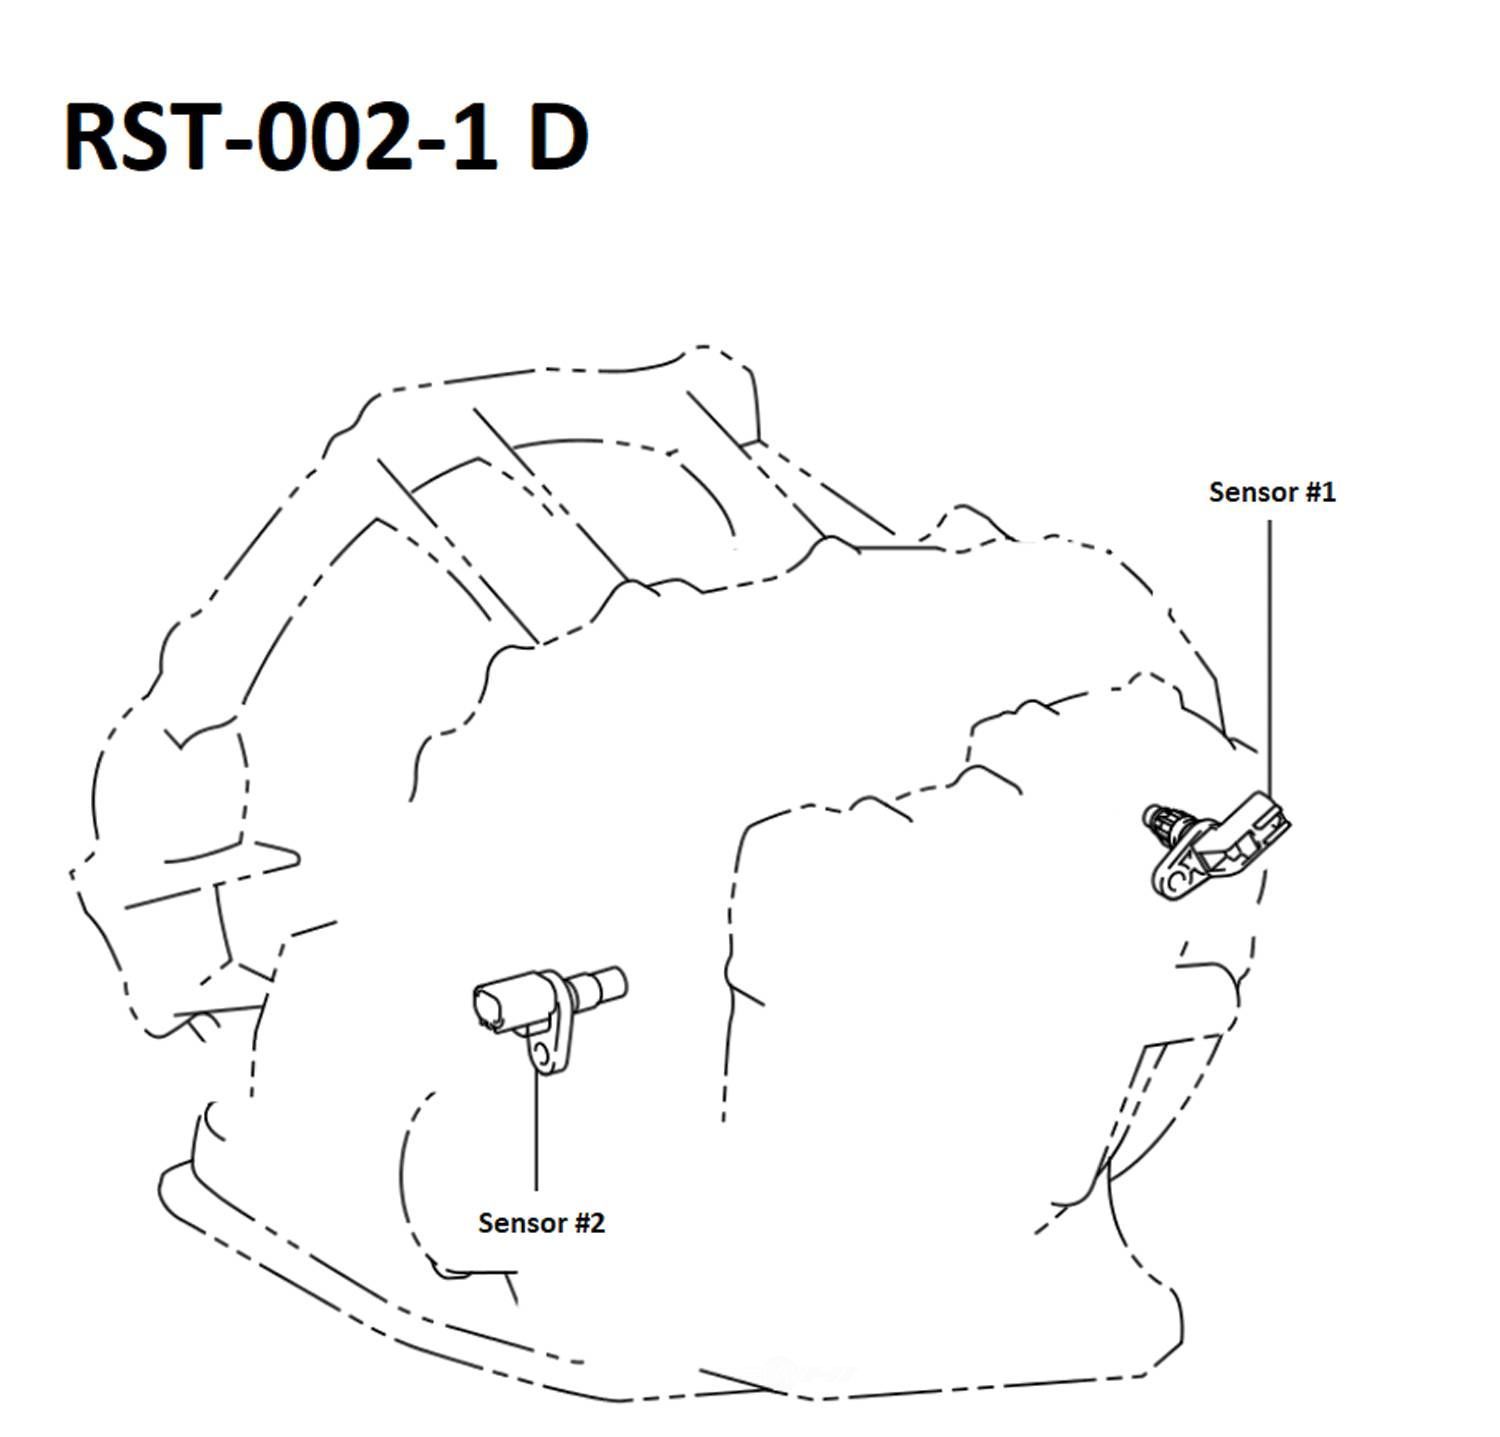 AISIN WORLD CORP OF AMERICA - Automatic Transmission Revolution Sensor - AIS RST-002-1